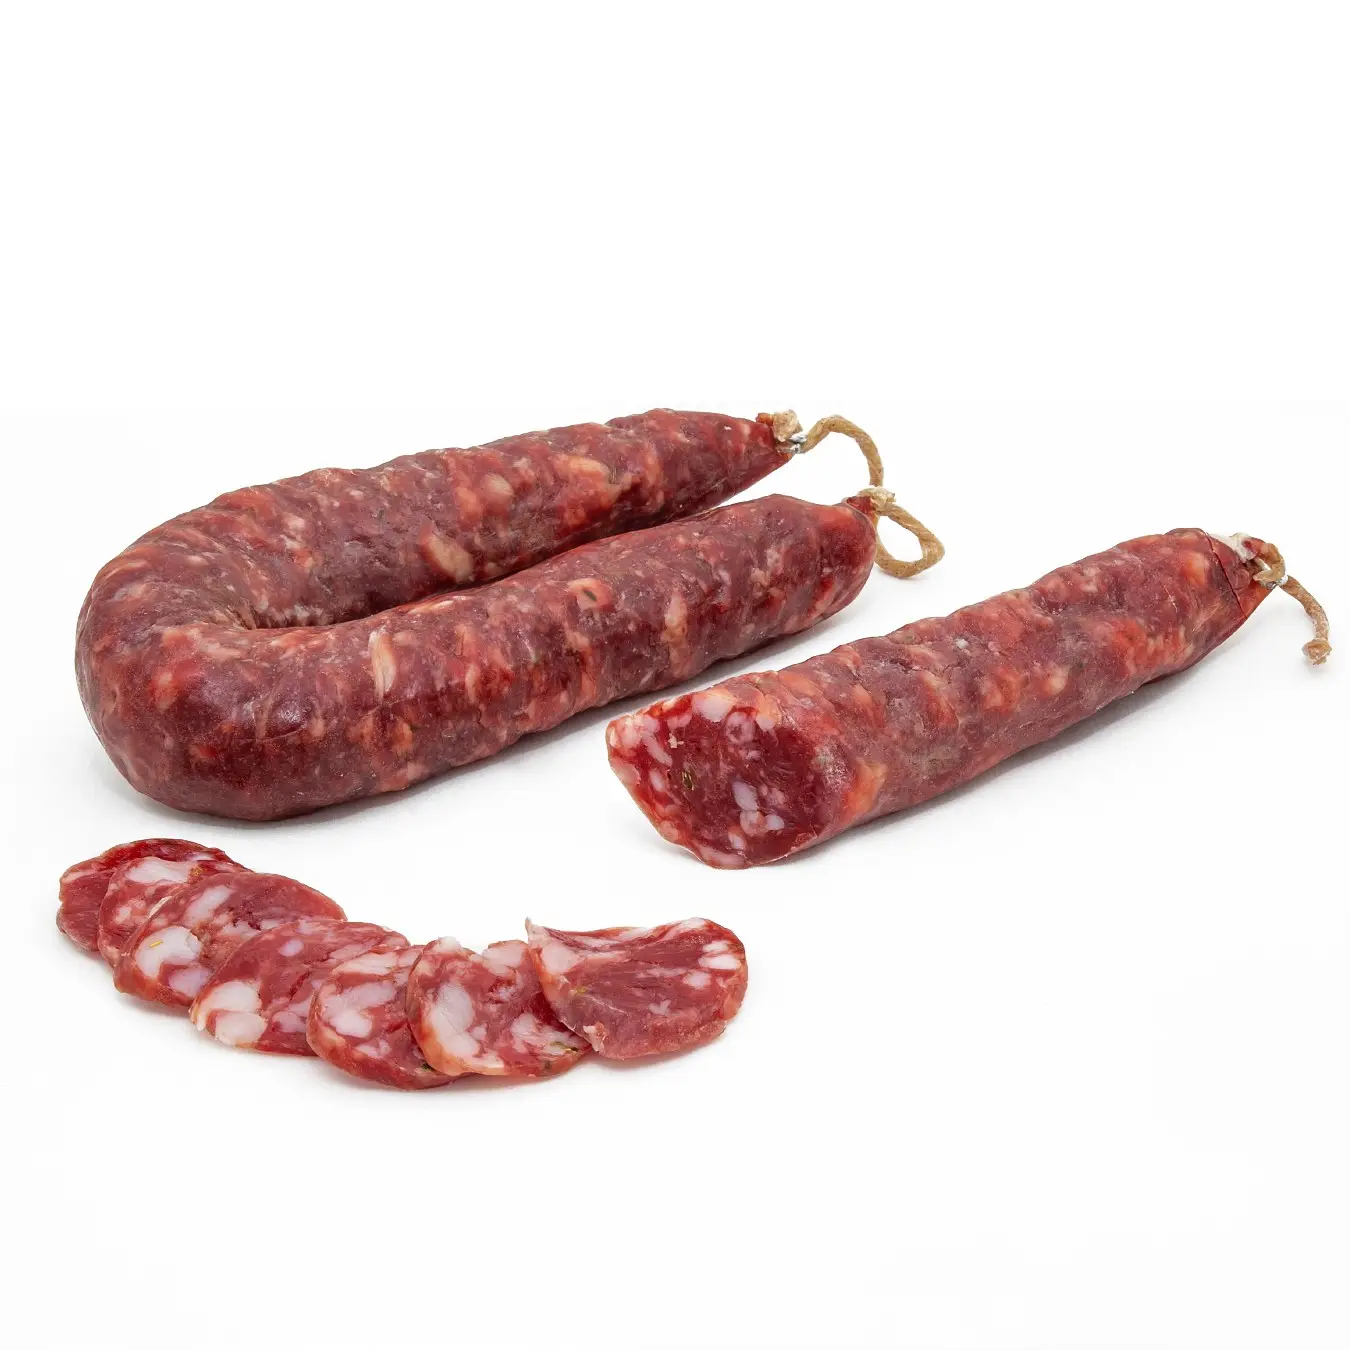 Best quality Local breeding pork Italian Traditional Sausage Air dry pork meat mixed with salt Pork Sausage